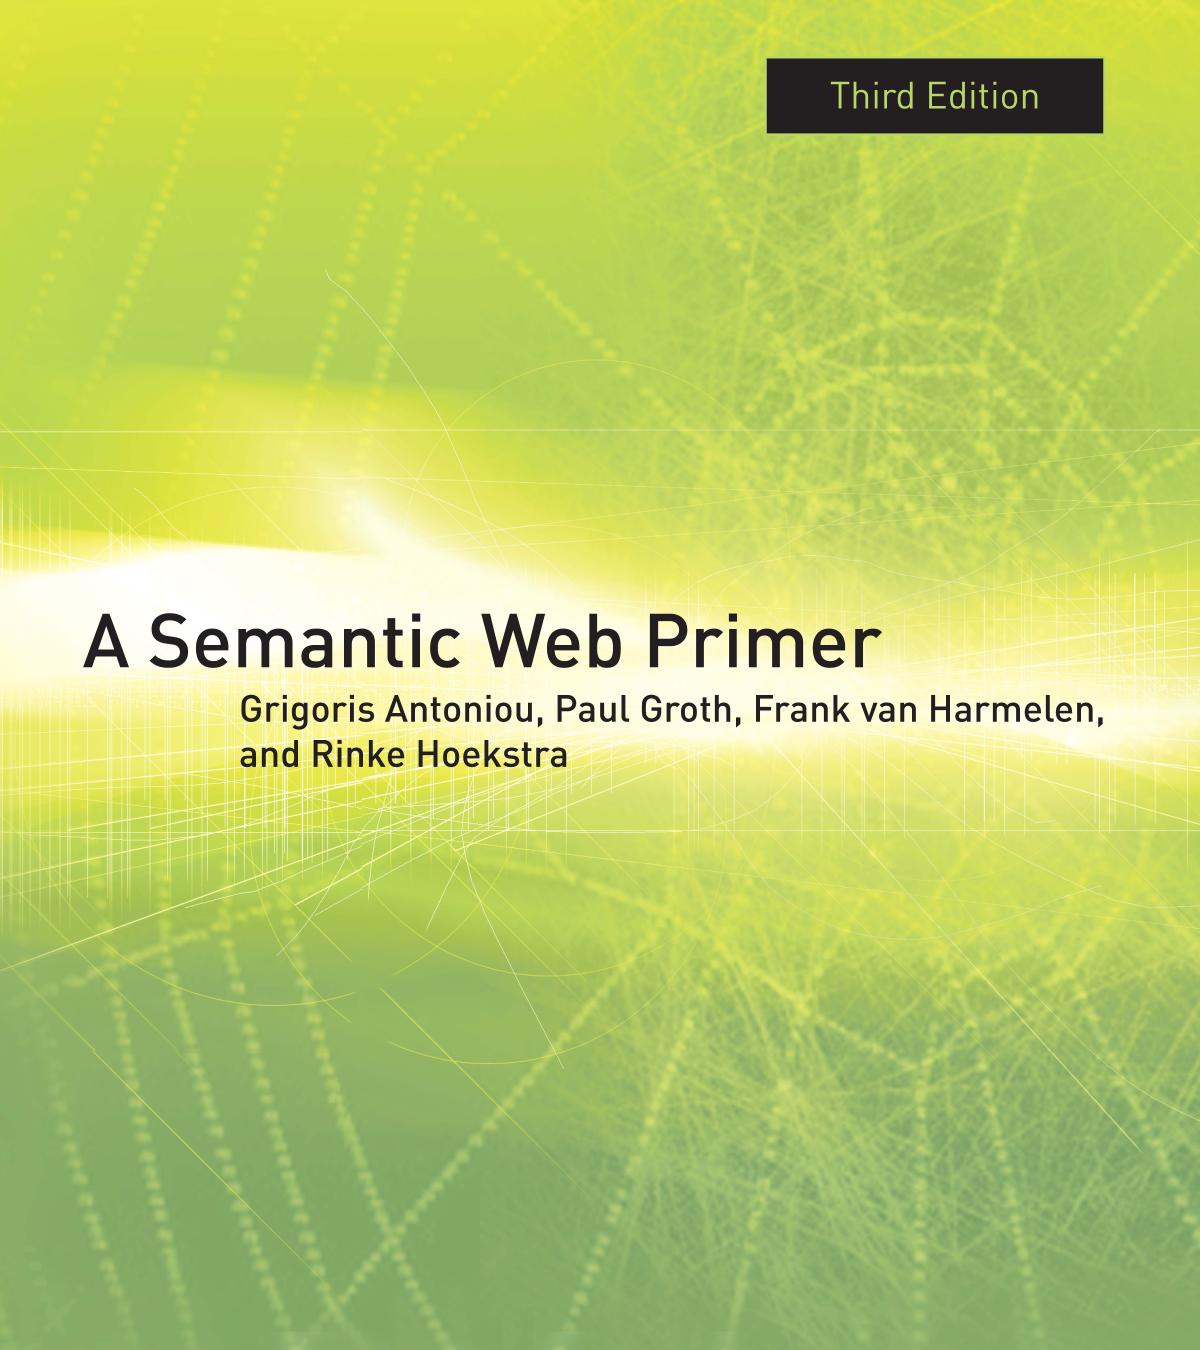 A Semantic Web Primer, Third Edition